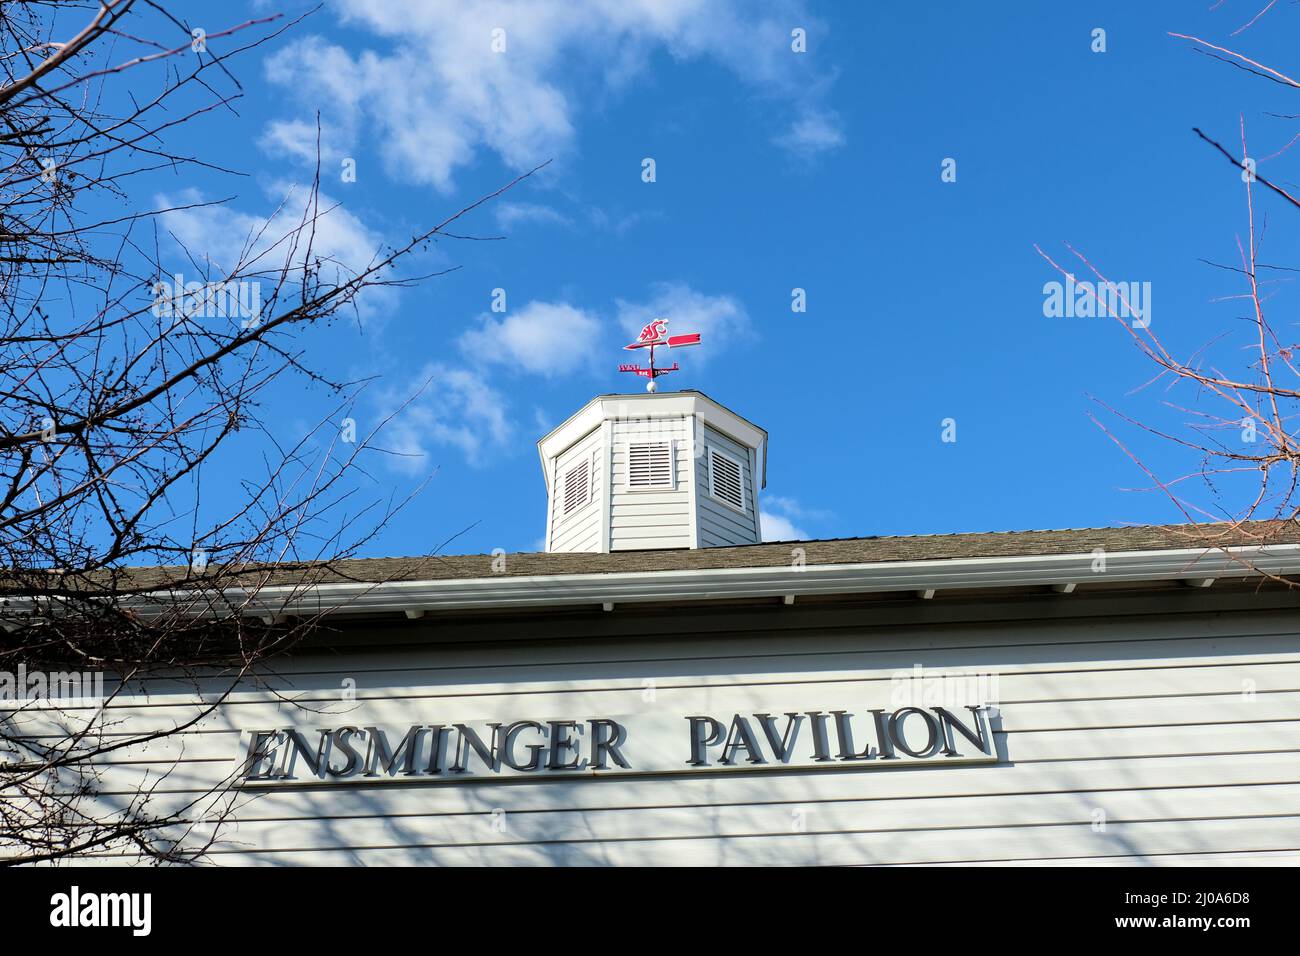 Washington State University’s Ensminger Pavilion, a former livestock-judging barn built in 1933 turned a modern events center, with WSU weathervane. Stock Photo